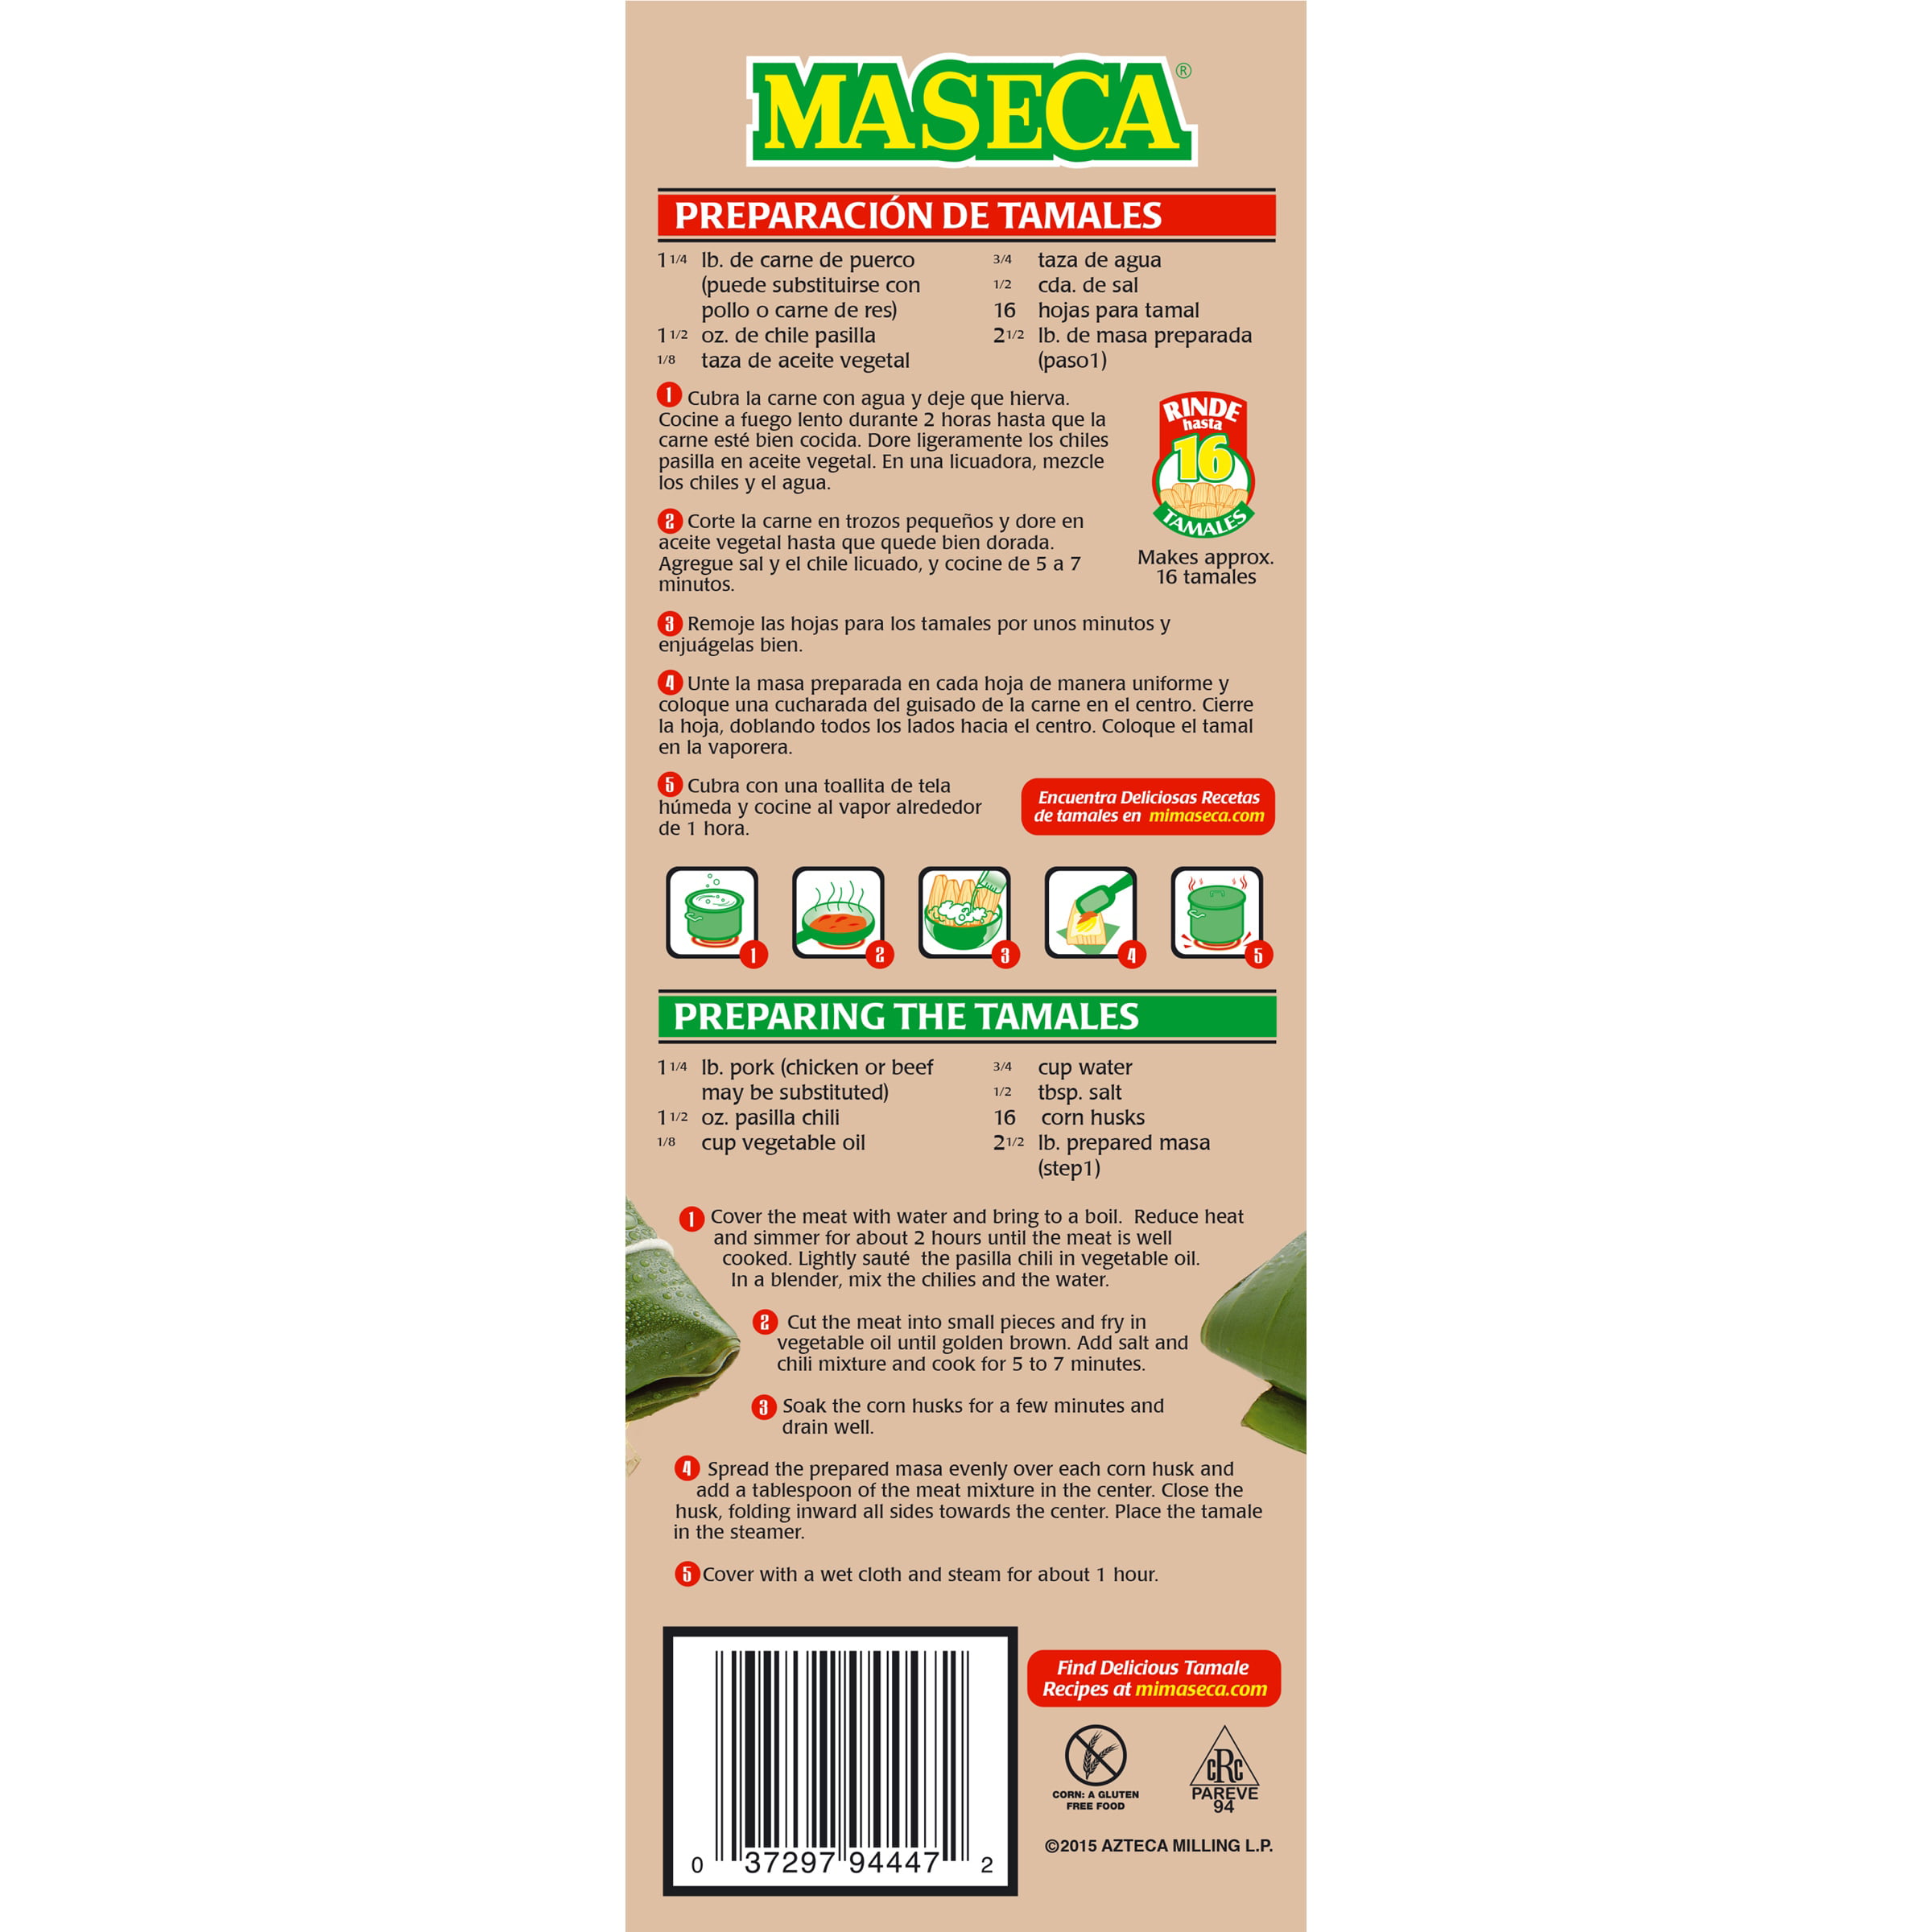 Masa Recipe For Tamales Maseca | Besto Blog